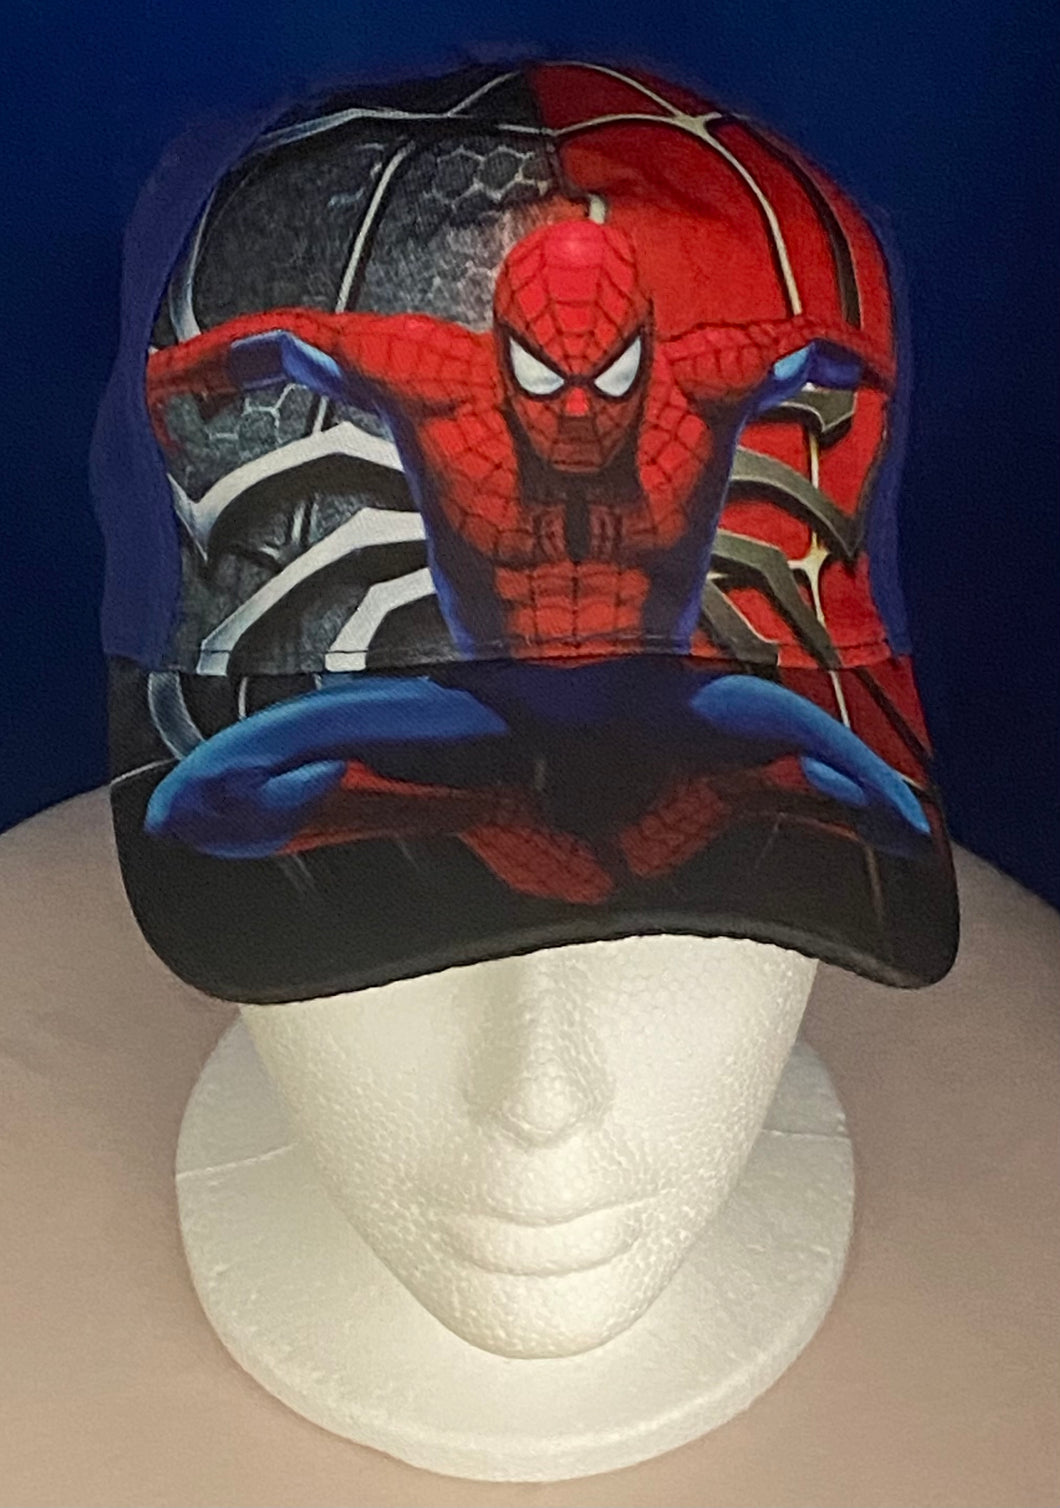 Boys Spiderman Hat